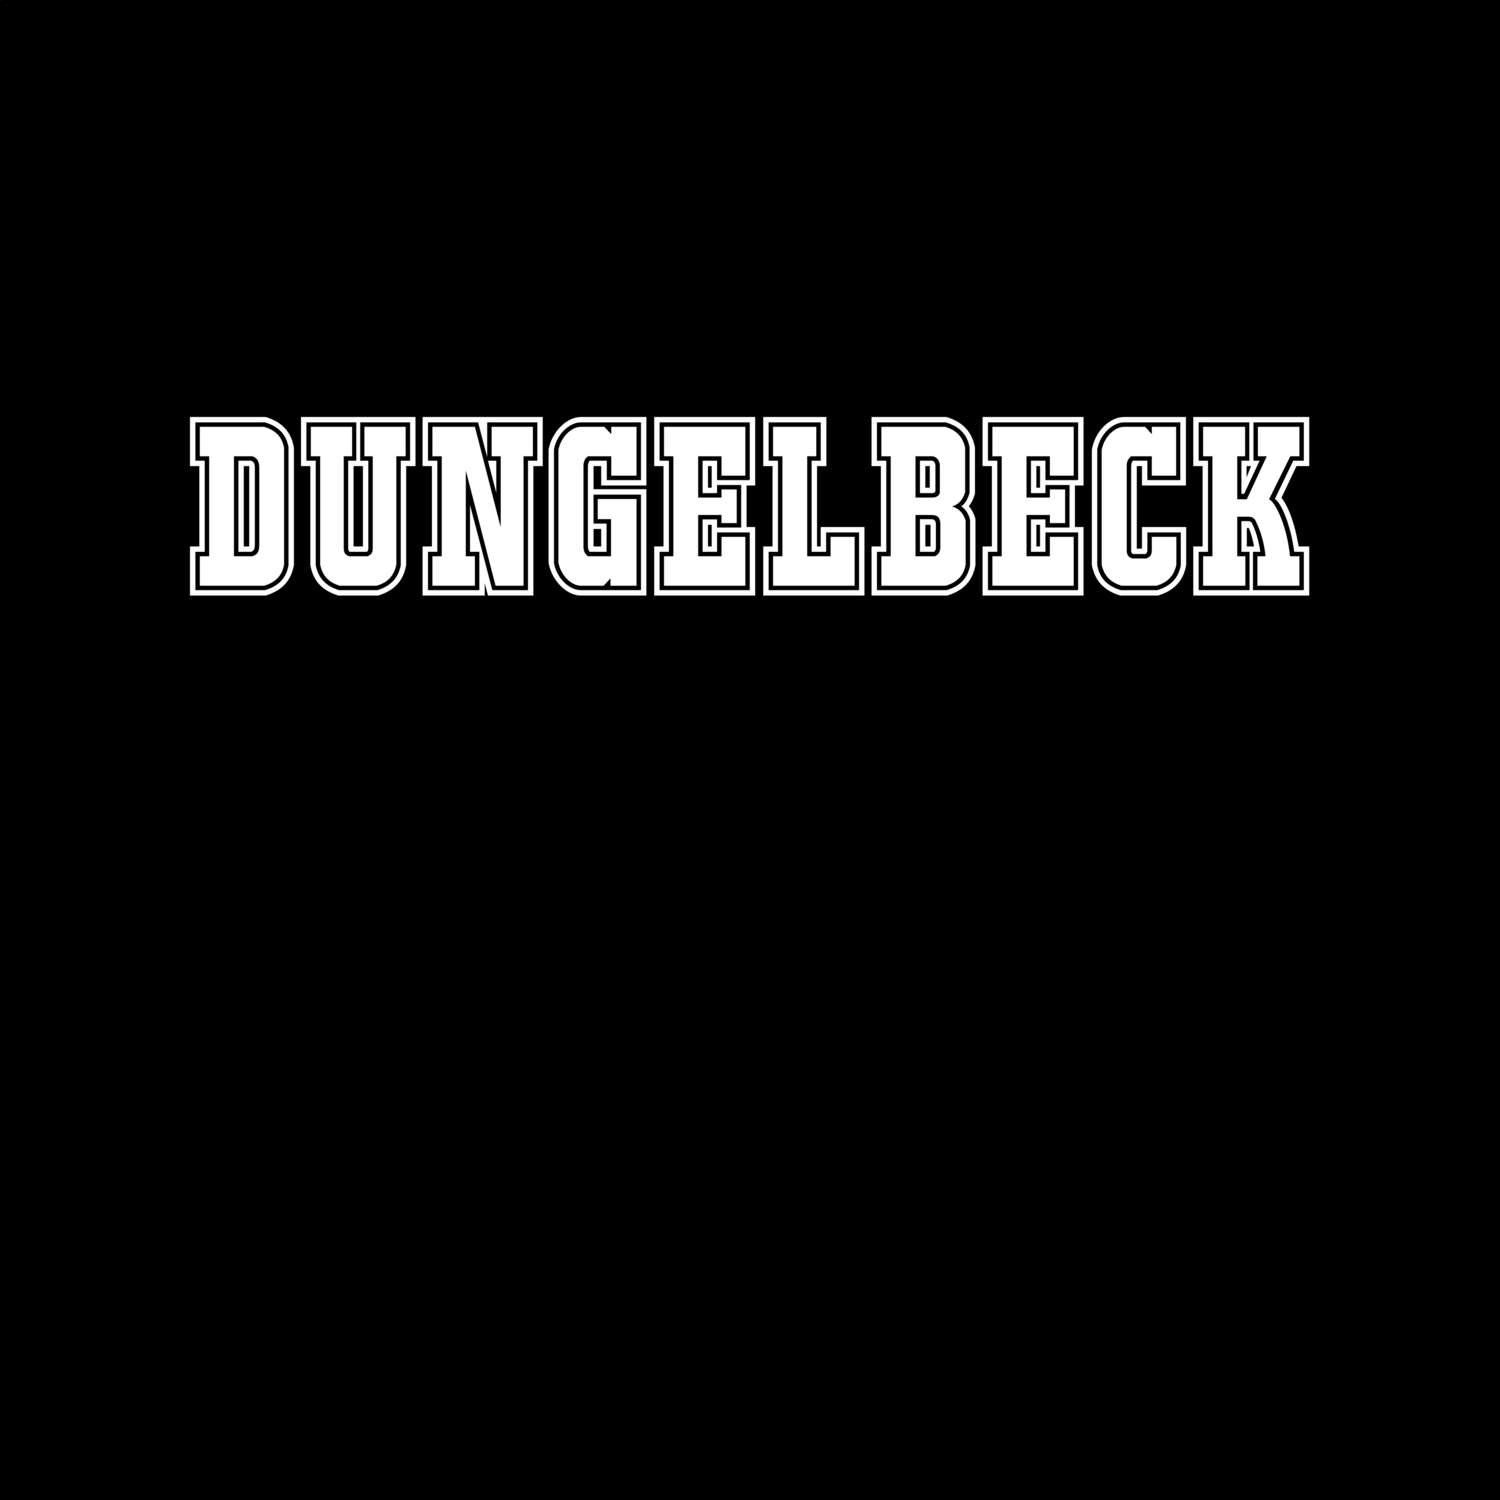 Dungelbeck T-Shirt »Classic«